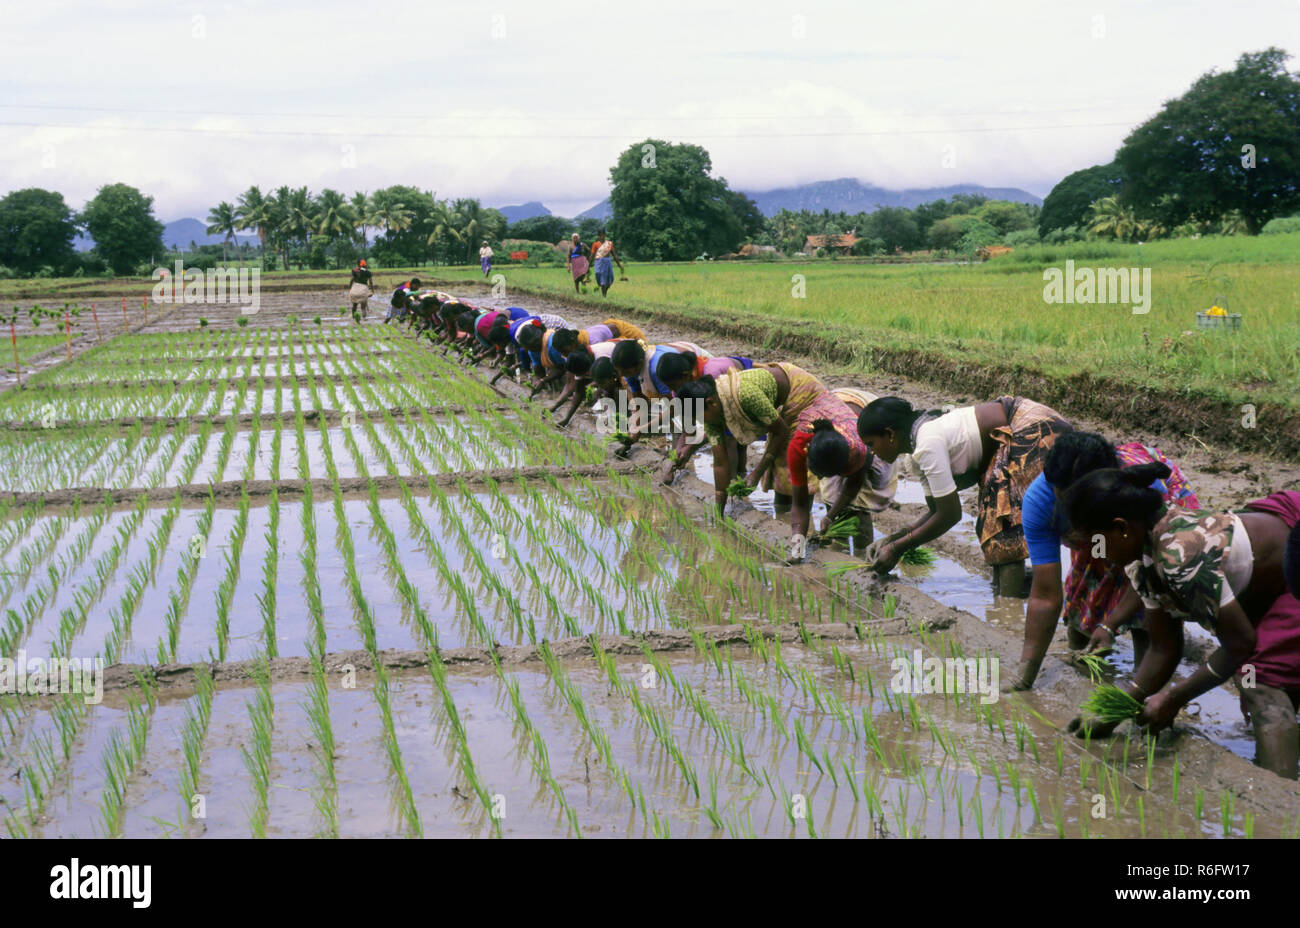 Frauen Umpflanzen Pflanzen in Feld, Indien Stockfoto